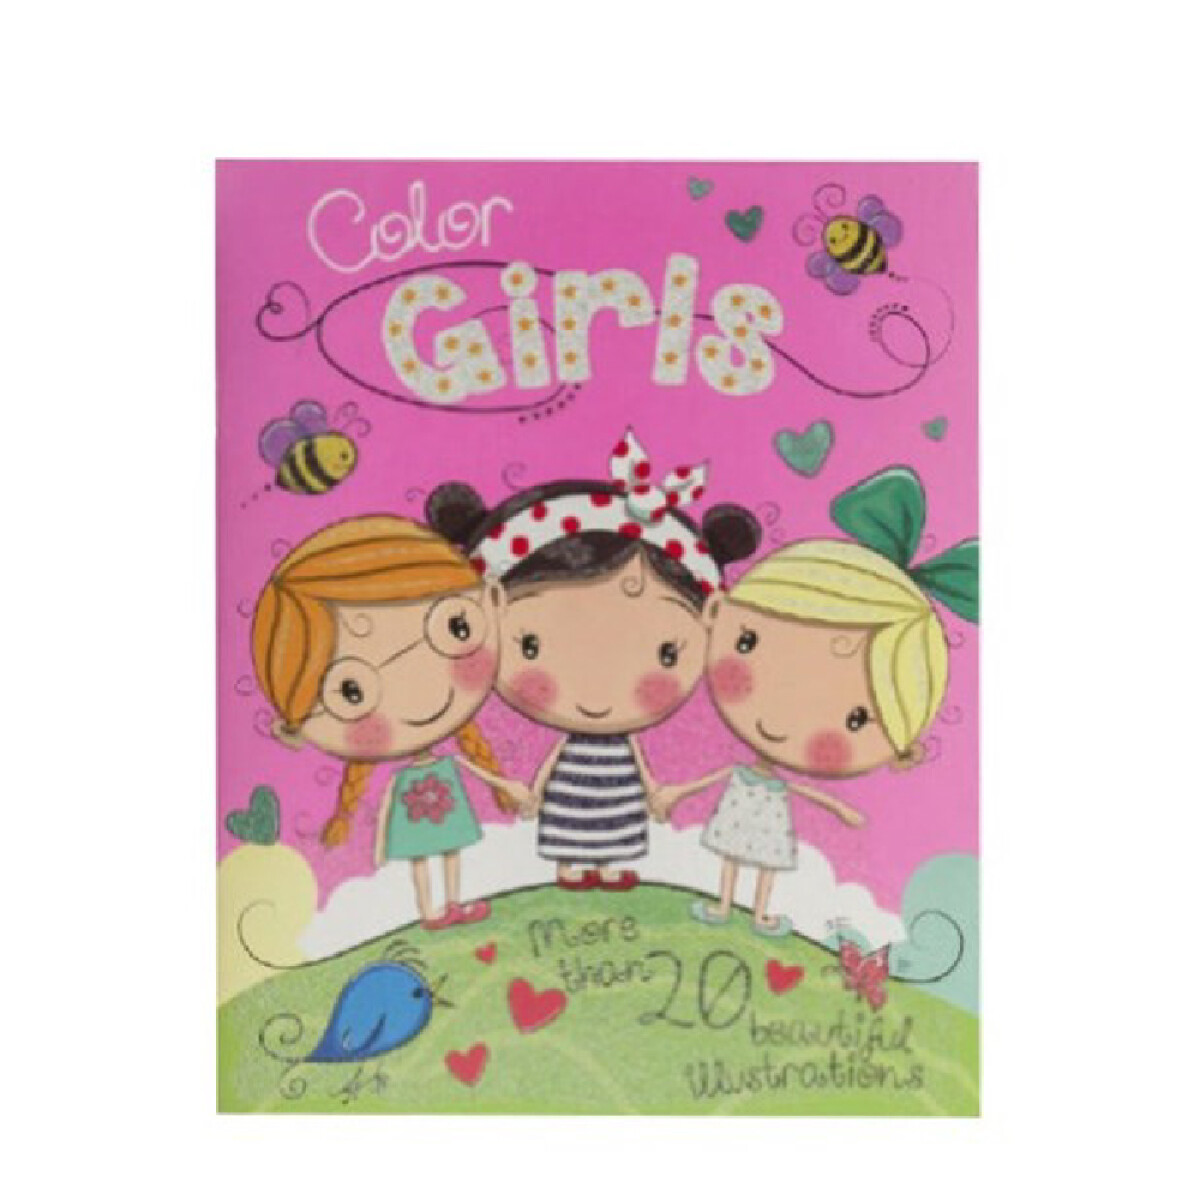 Libro Colorear Girls Colors 7800-7801 